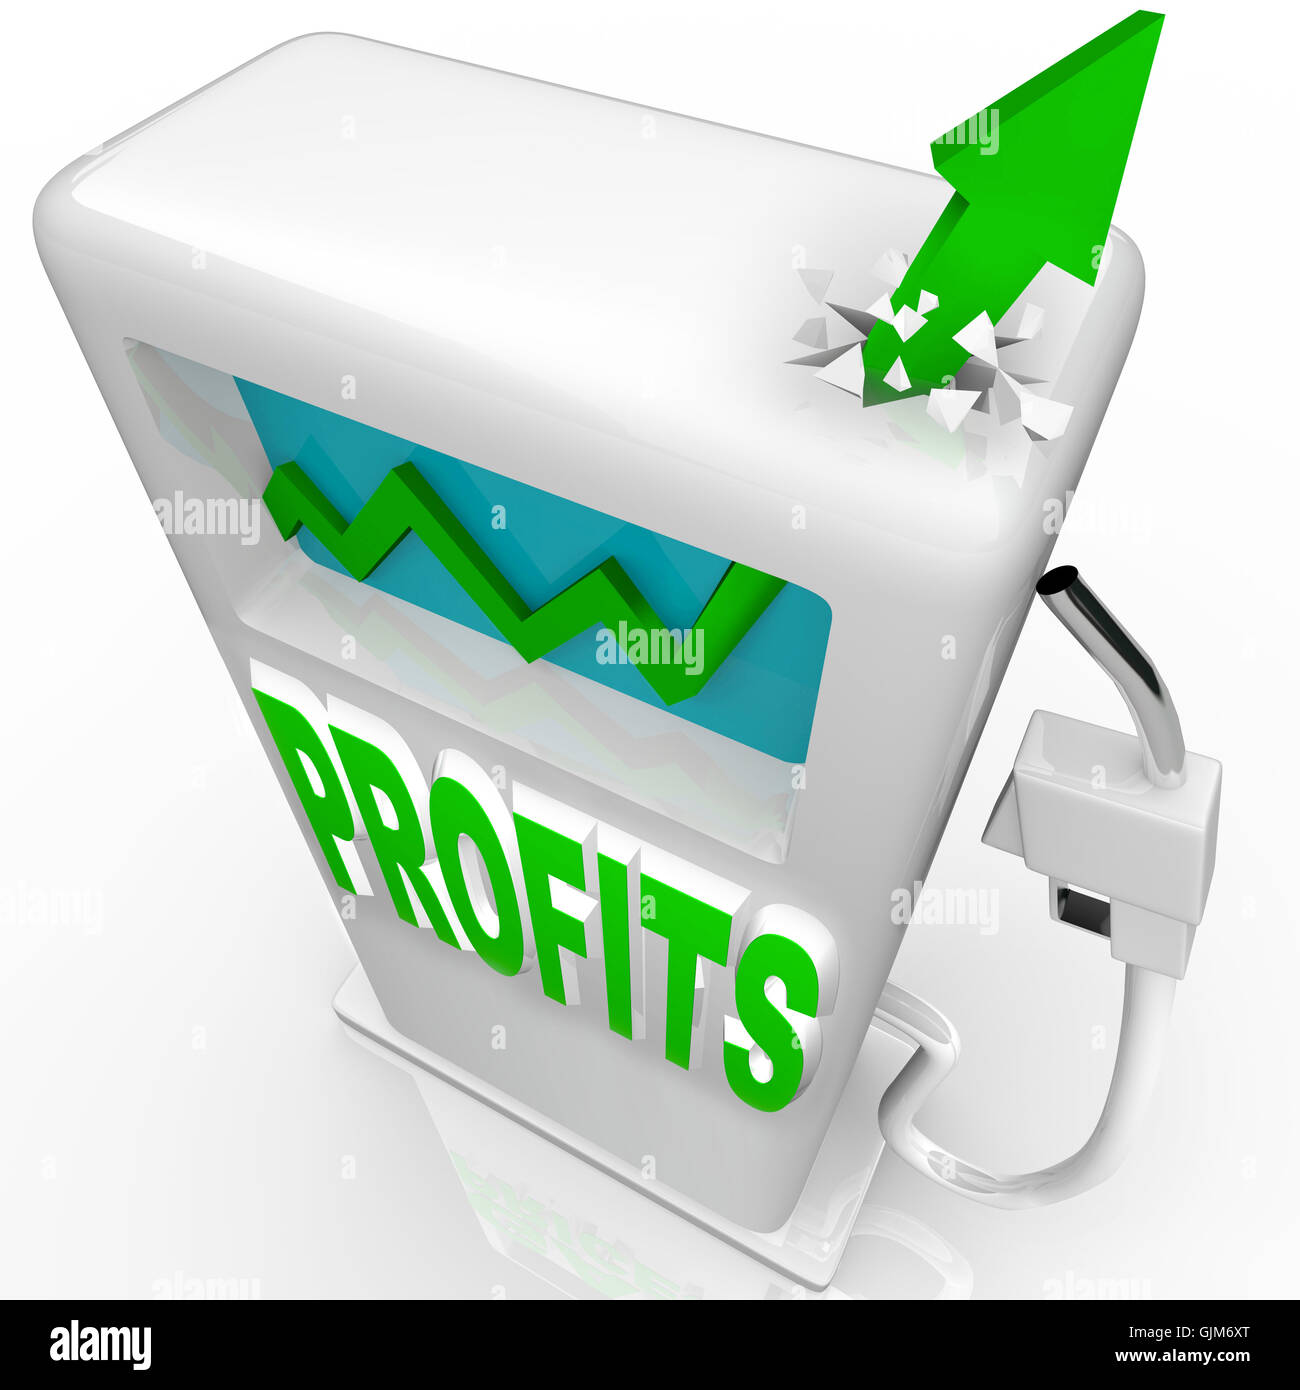 Profits Rising - Growth Arrow on Gas Pump Stock Photo